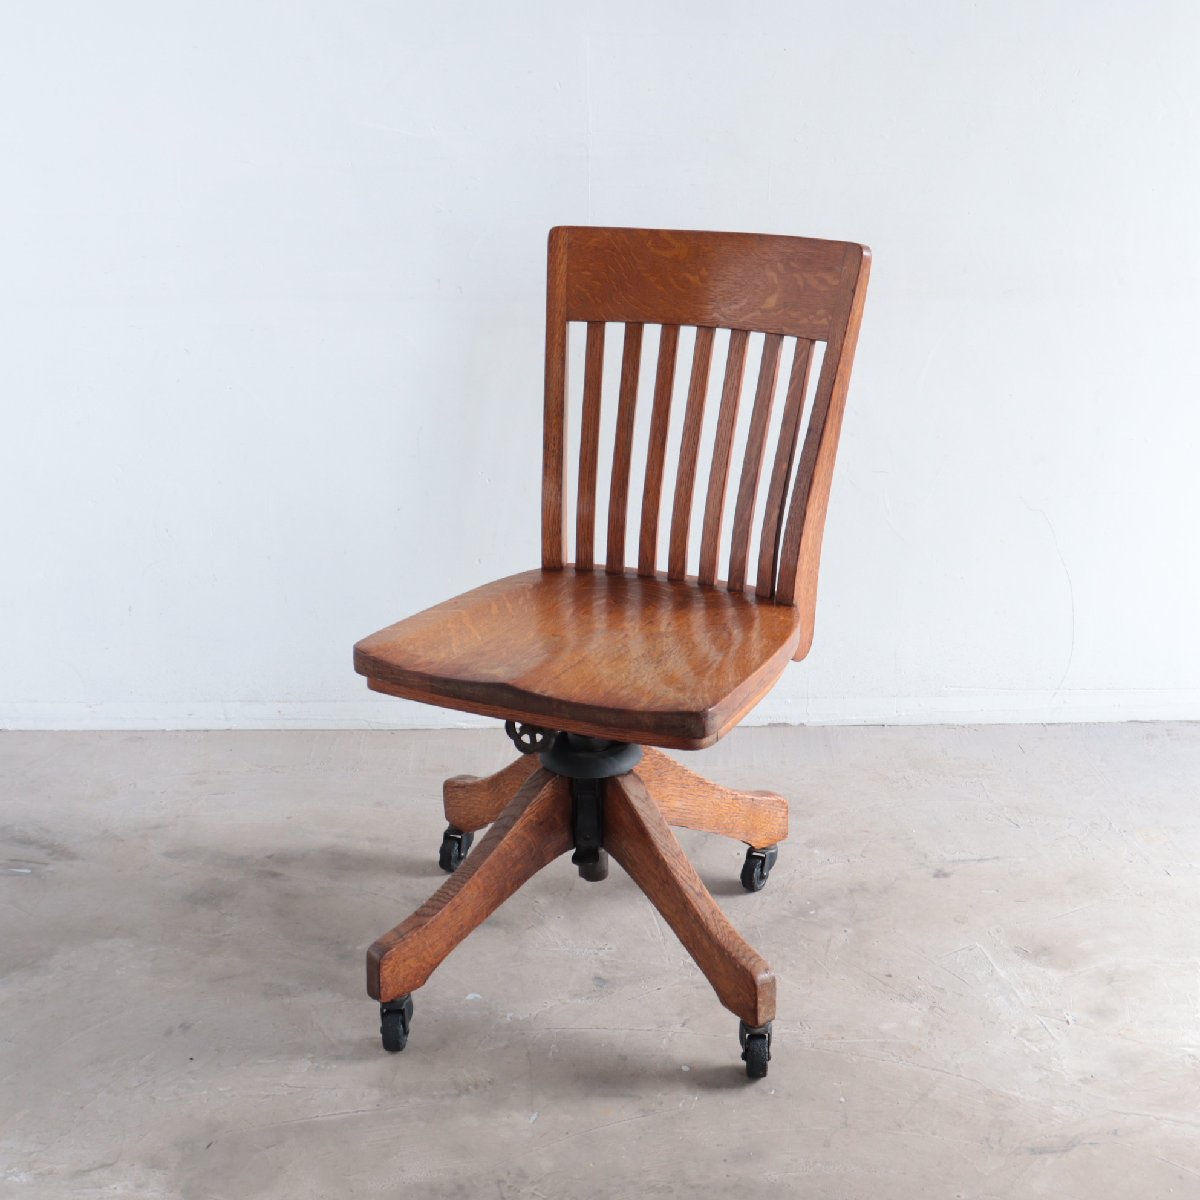 50s アメリカ ヴィンテージ デスクチェア アンティーク 木製 椅子 